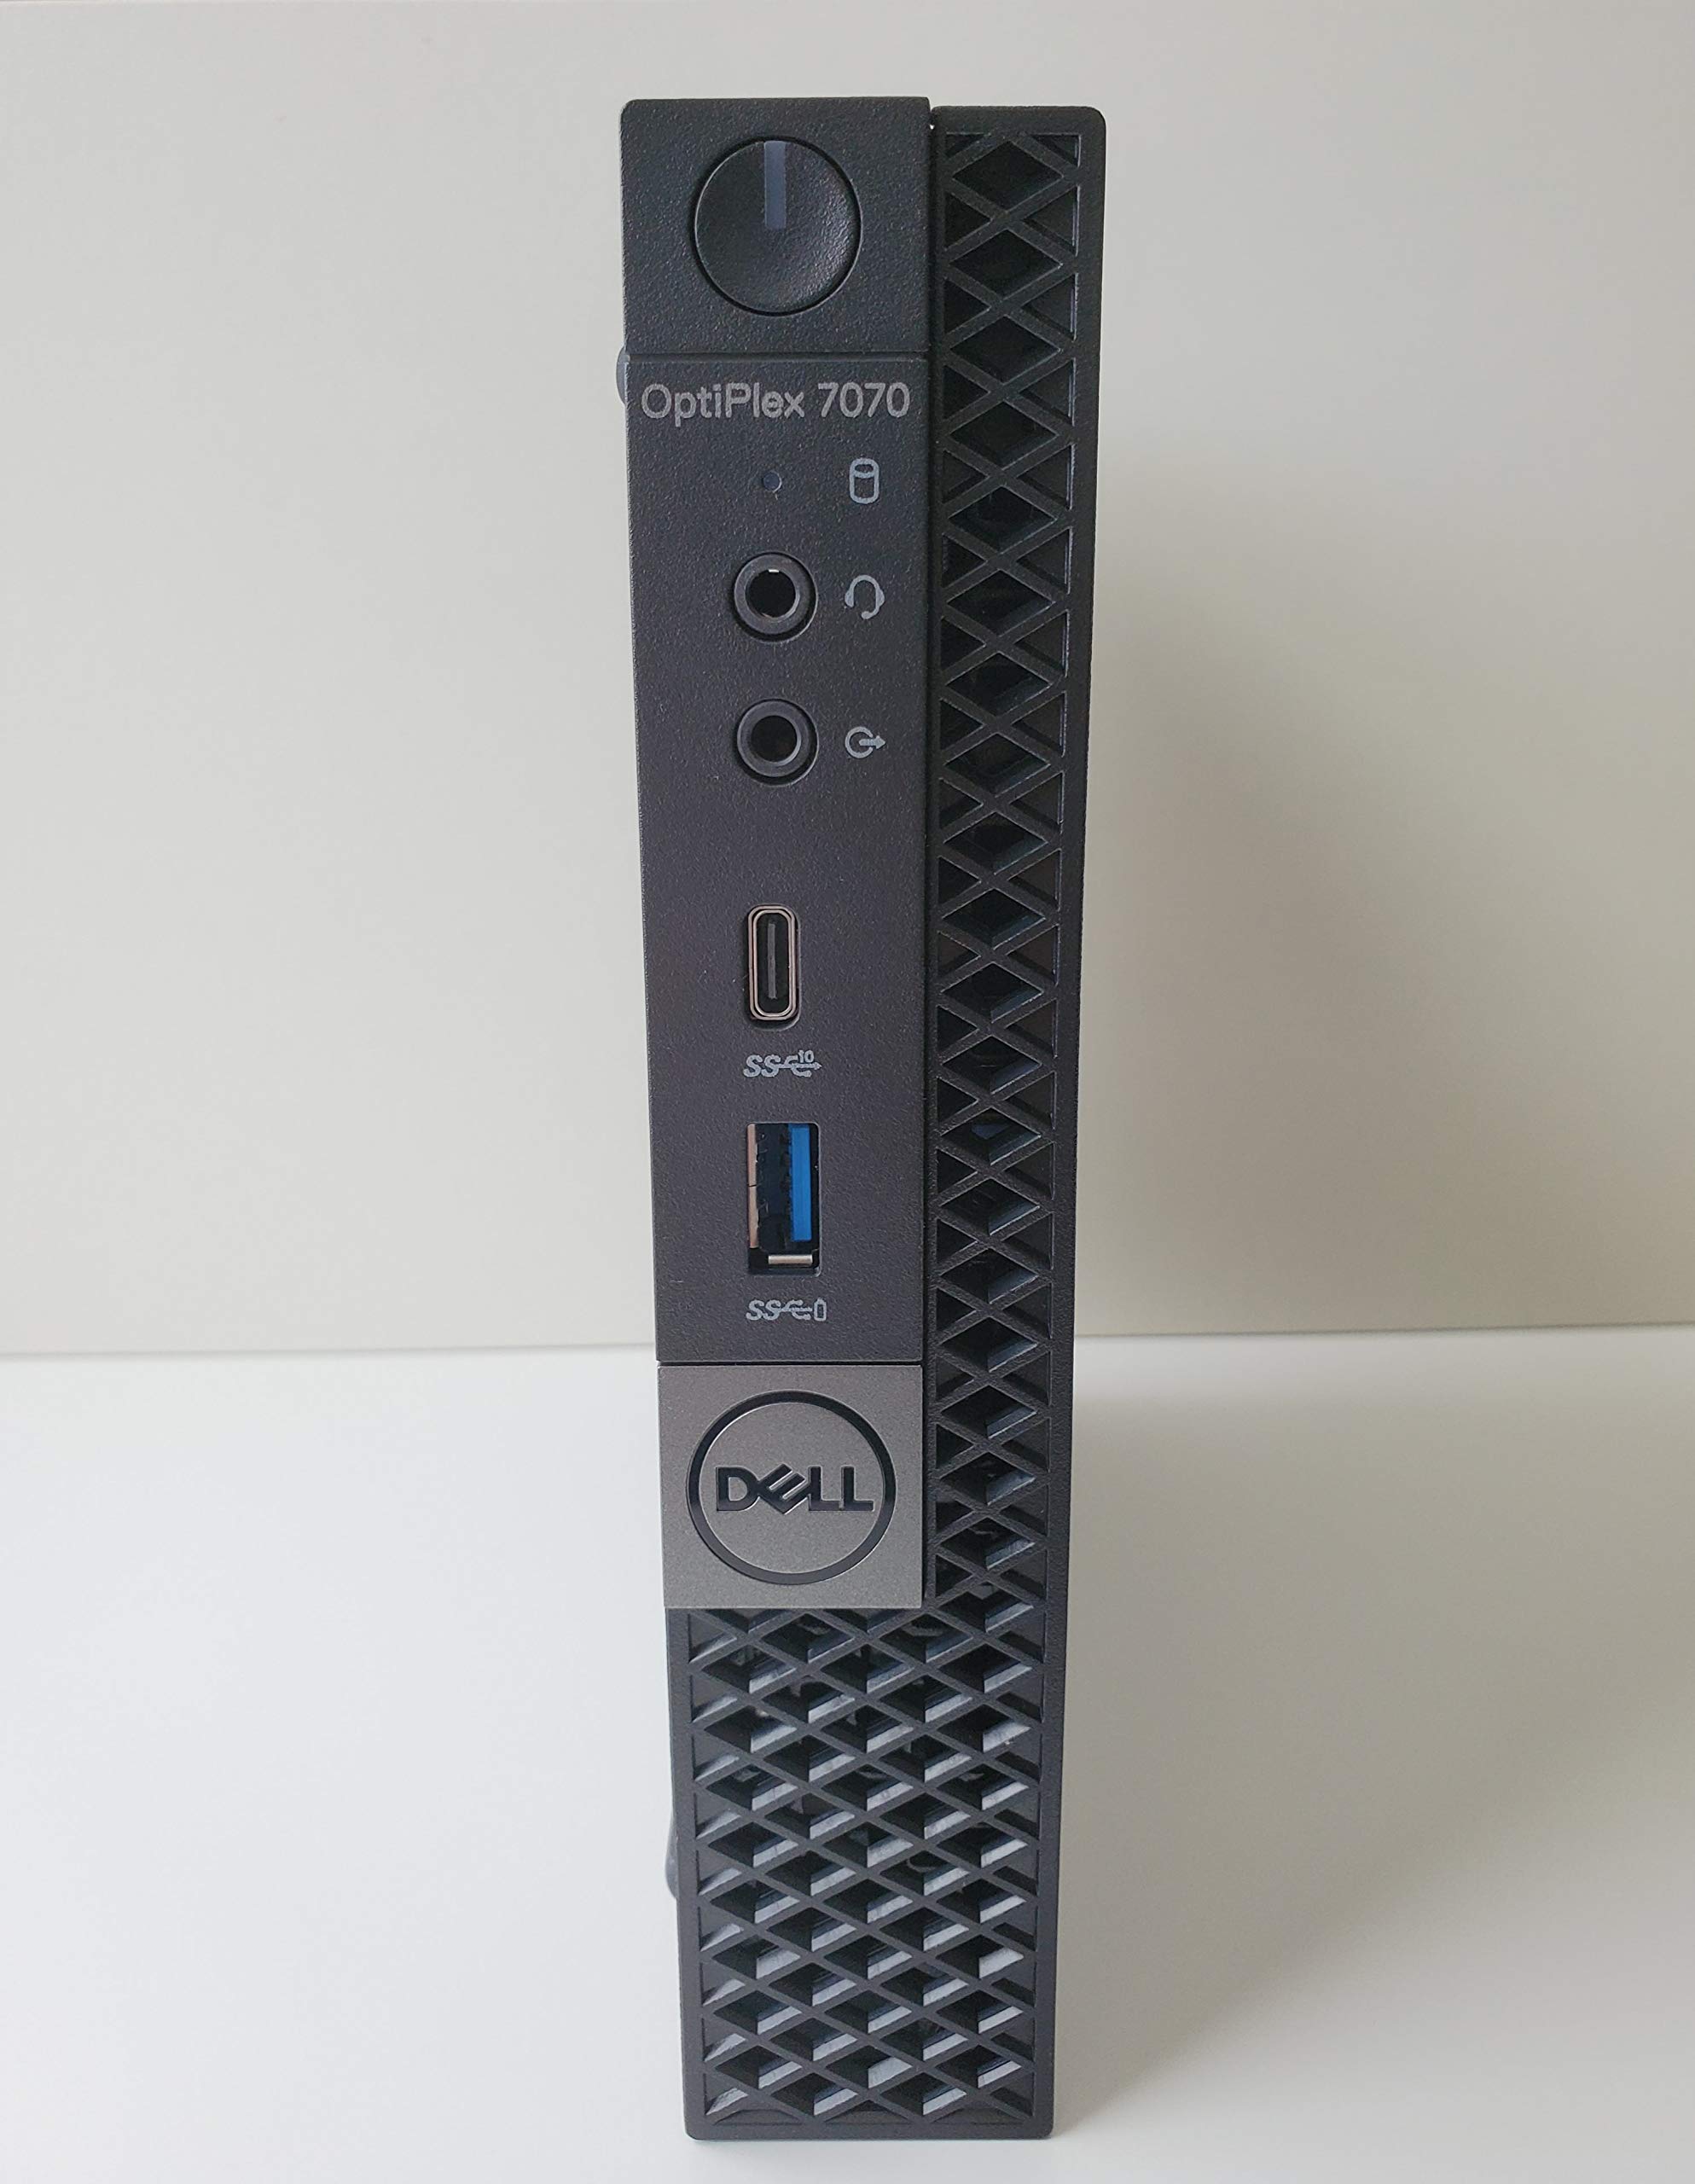 Dell Optiplex 7070 Micro (MFF) PC Intel Core i7-9700 3.0GHZ 8GB 2666MHZ RAM 256GB M.2 PCIe SSD AC WiFi Windows 10 Pro (Renewed)